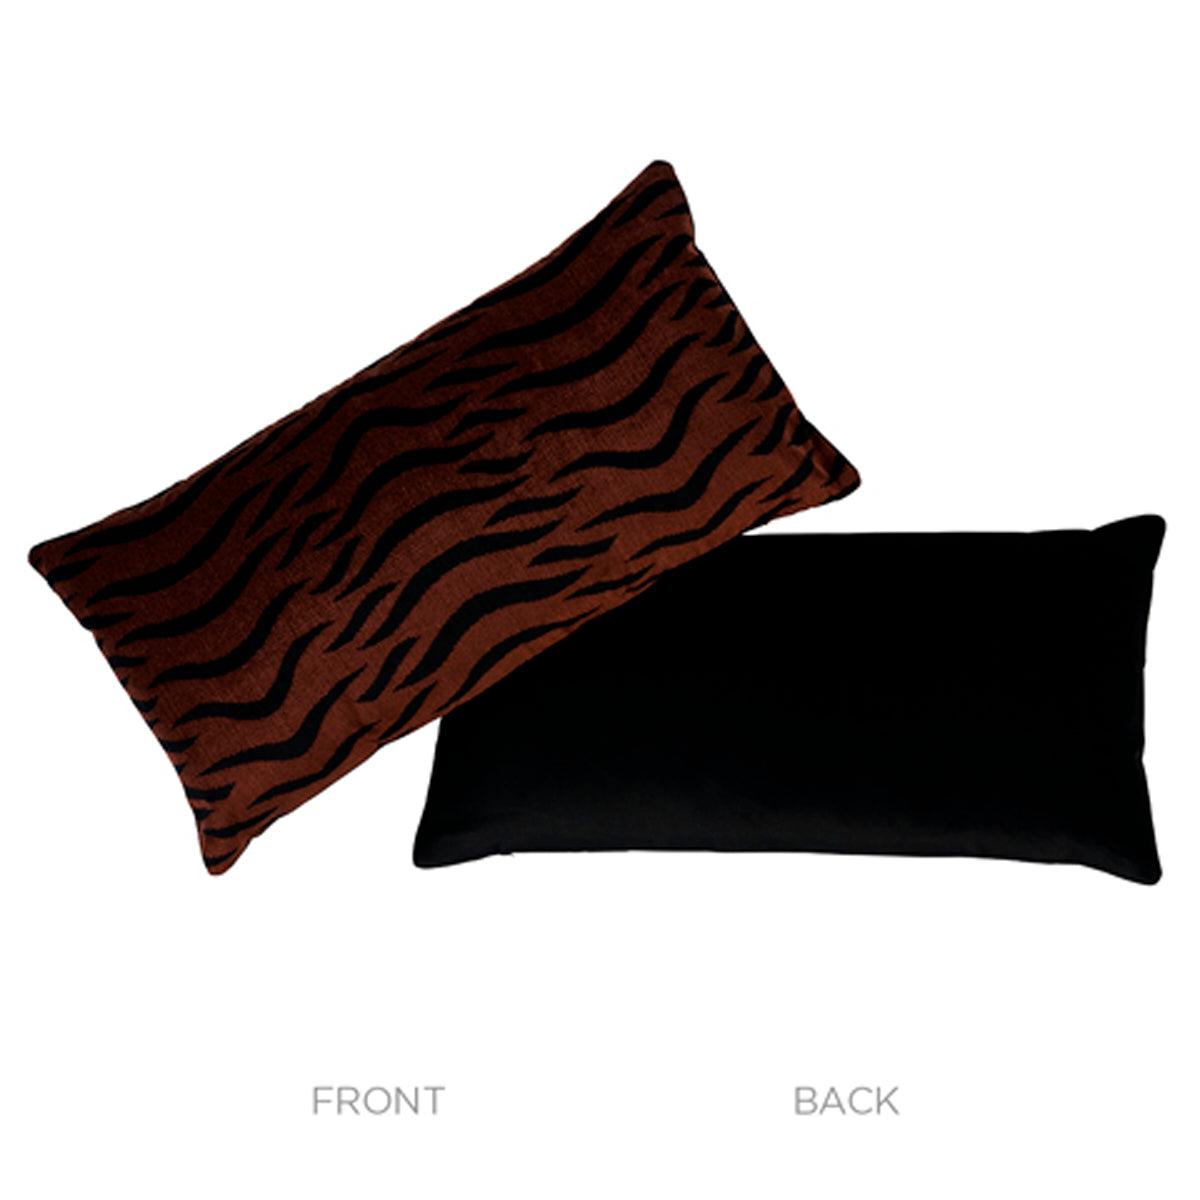 Sabi Tiger Velvet Pillow | Java